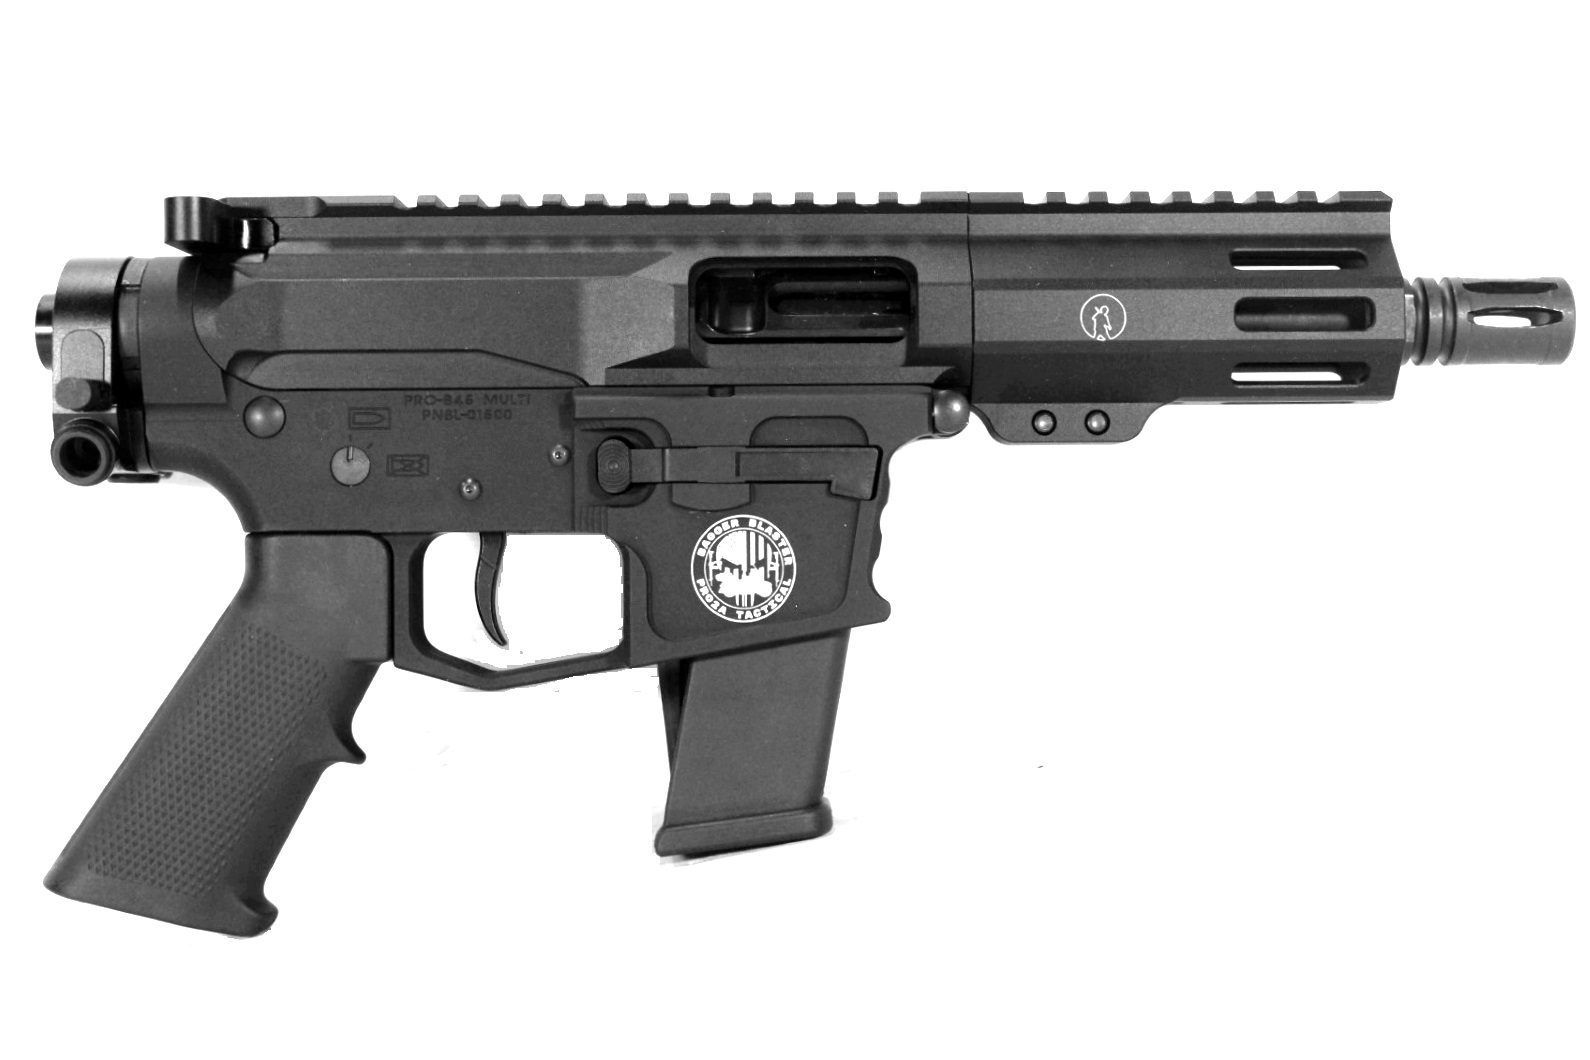 The Bagger Blaster 5 inch 40 S&W PCC Pistol 